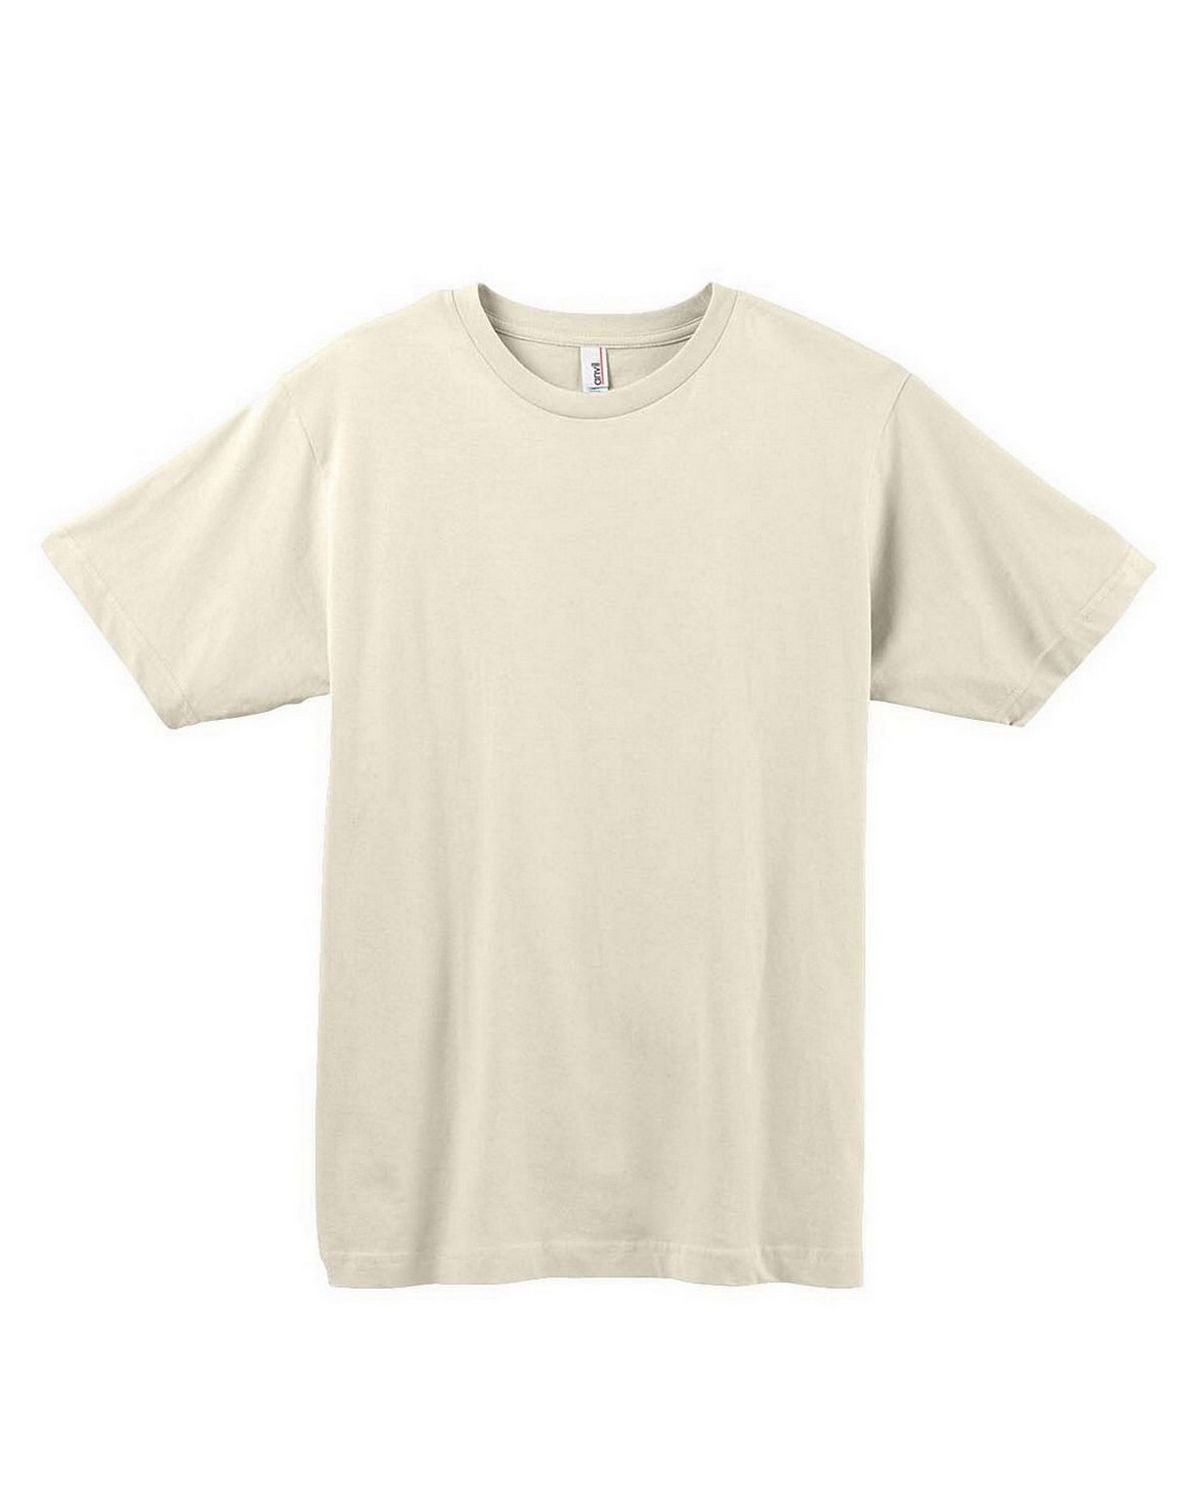 Anvil 490 Organic Men's Ringspun T-Shirt